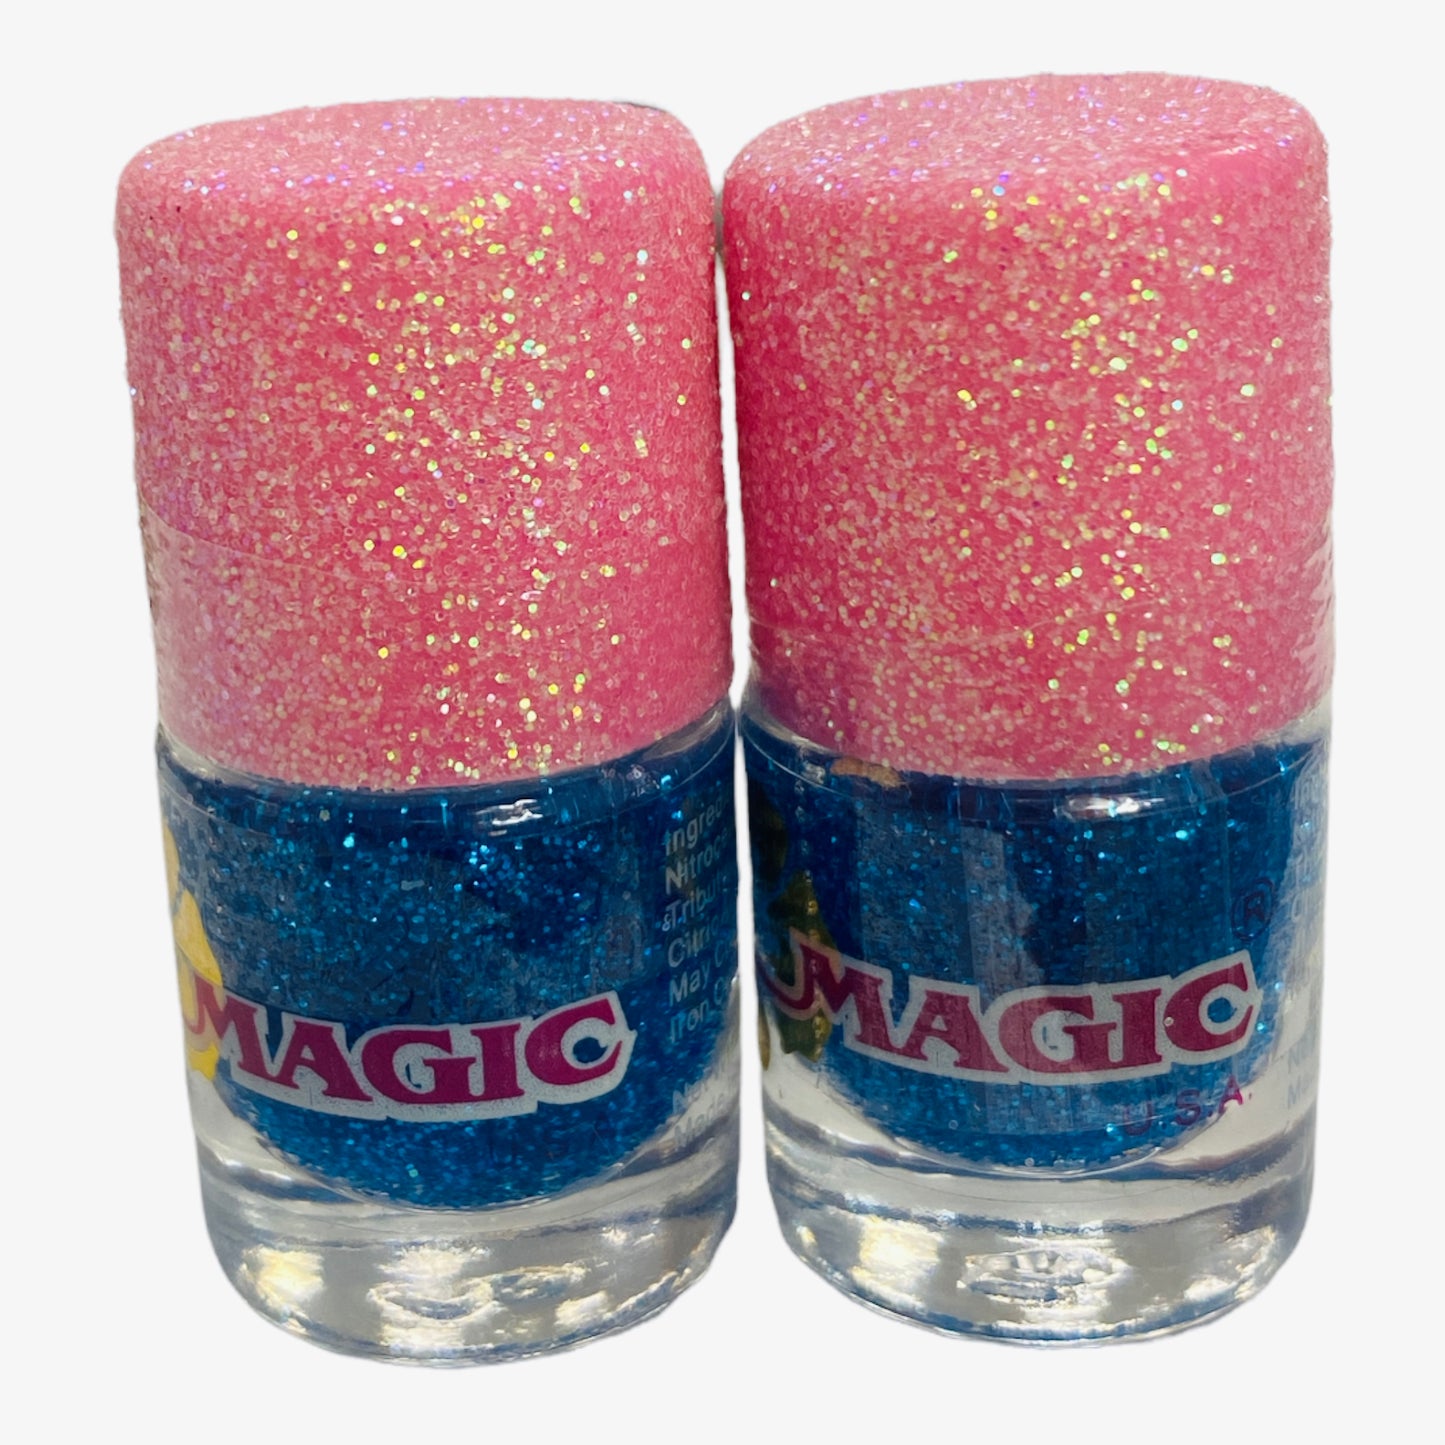 Magic Glitter Nail Polish